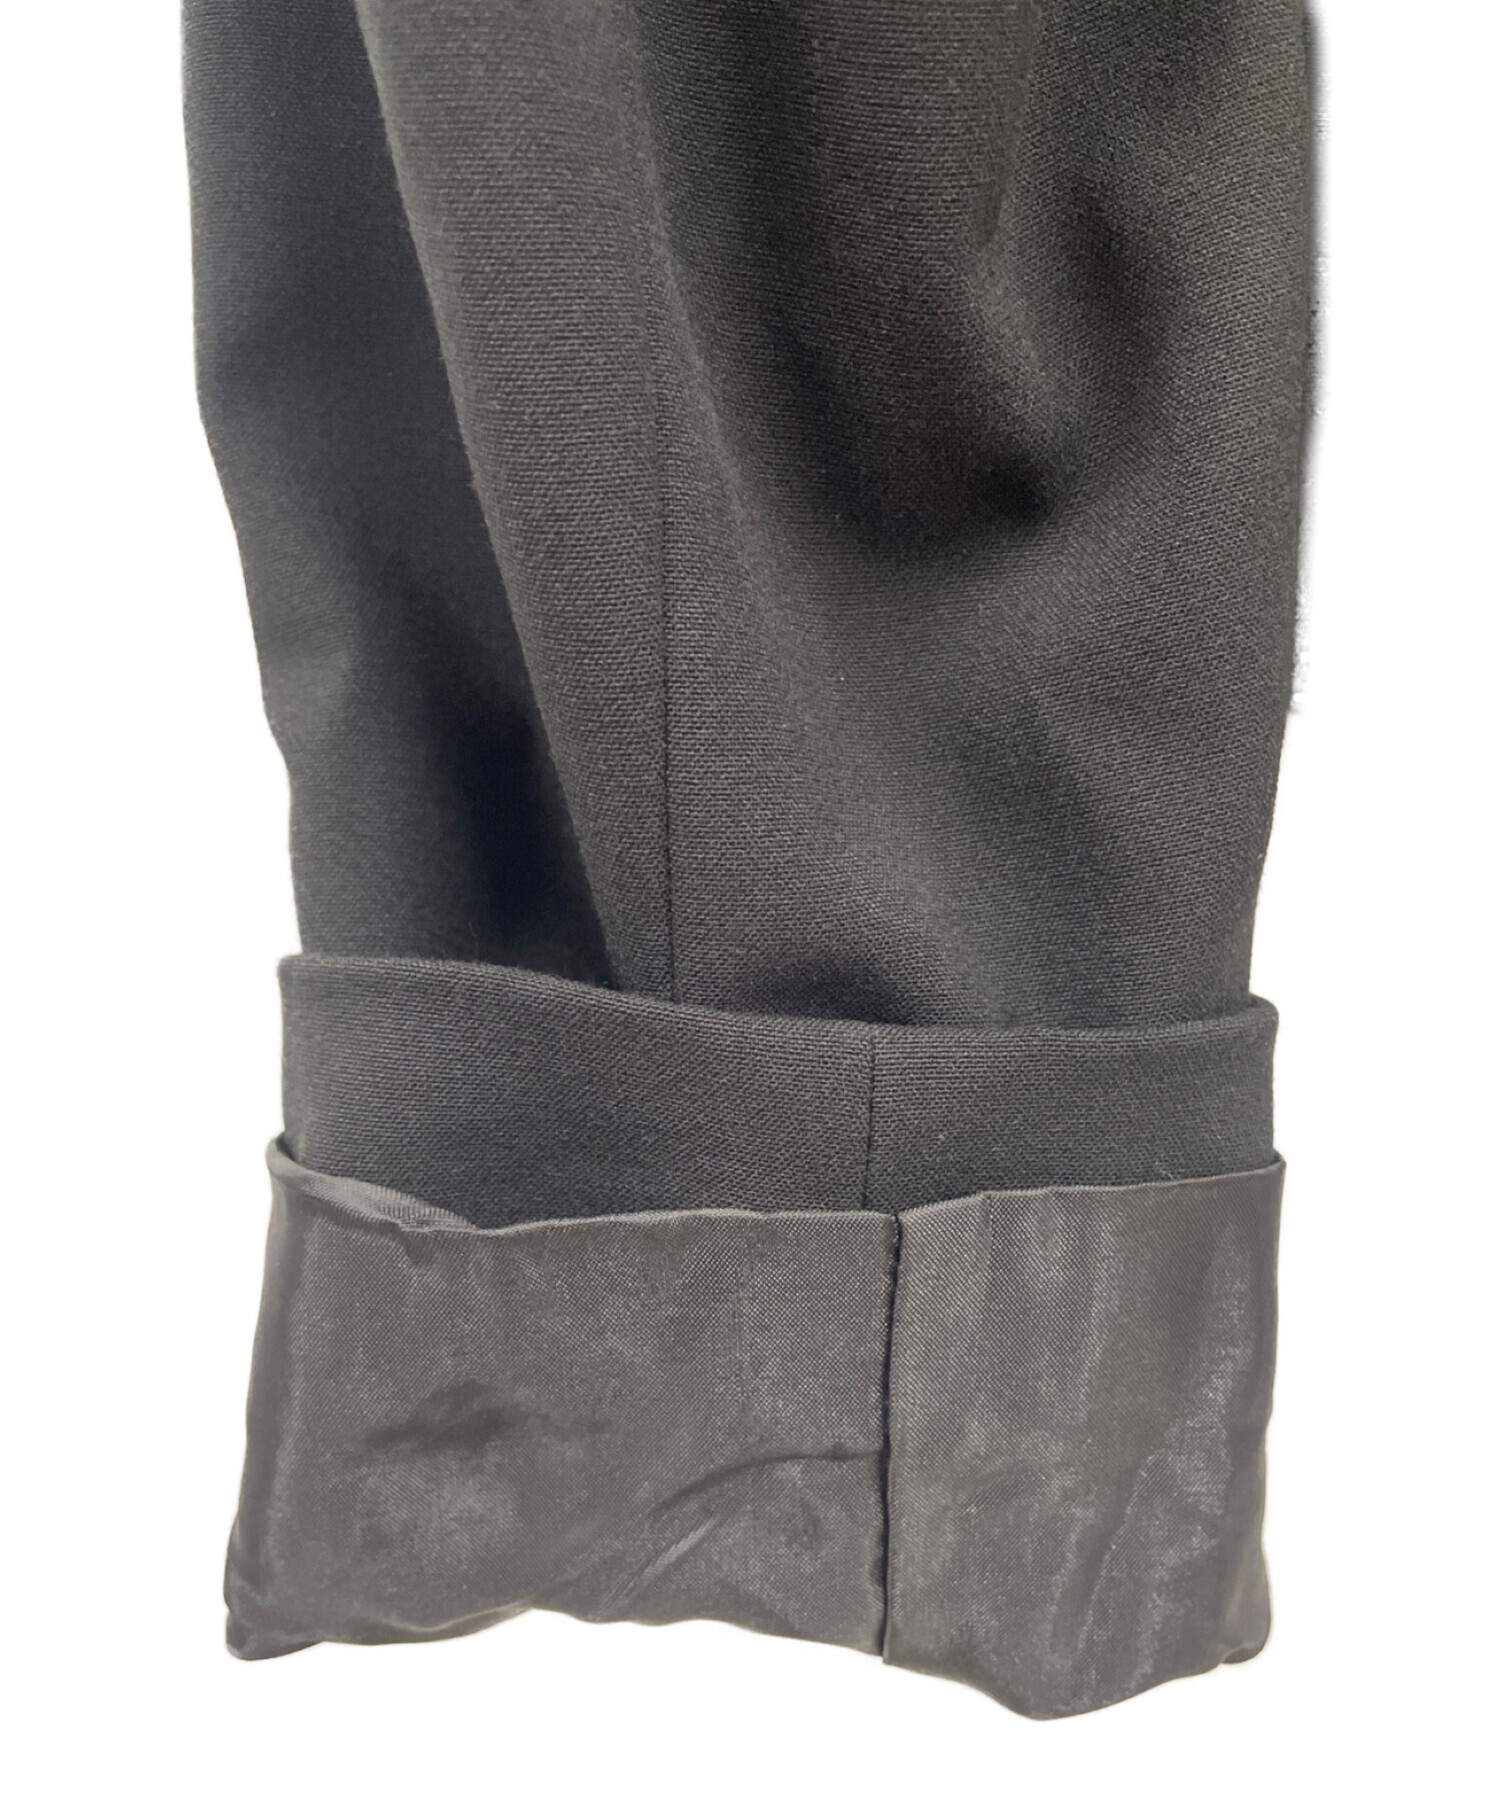 Calvin Klein (カルバンクライン) セットアップスーツ ブラック サイズ:4